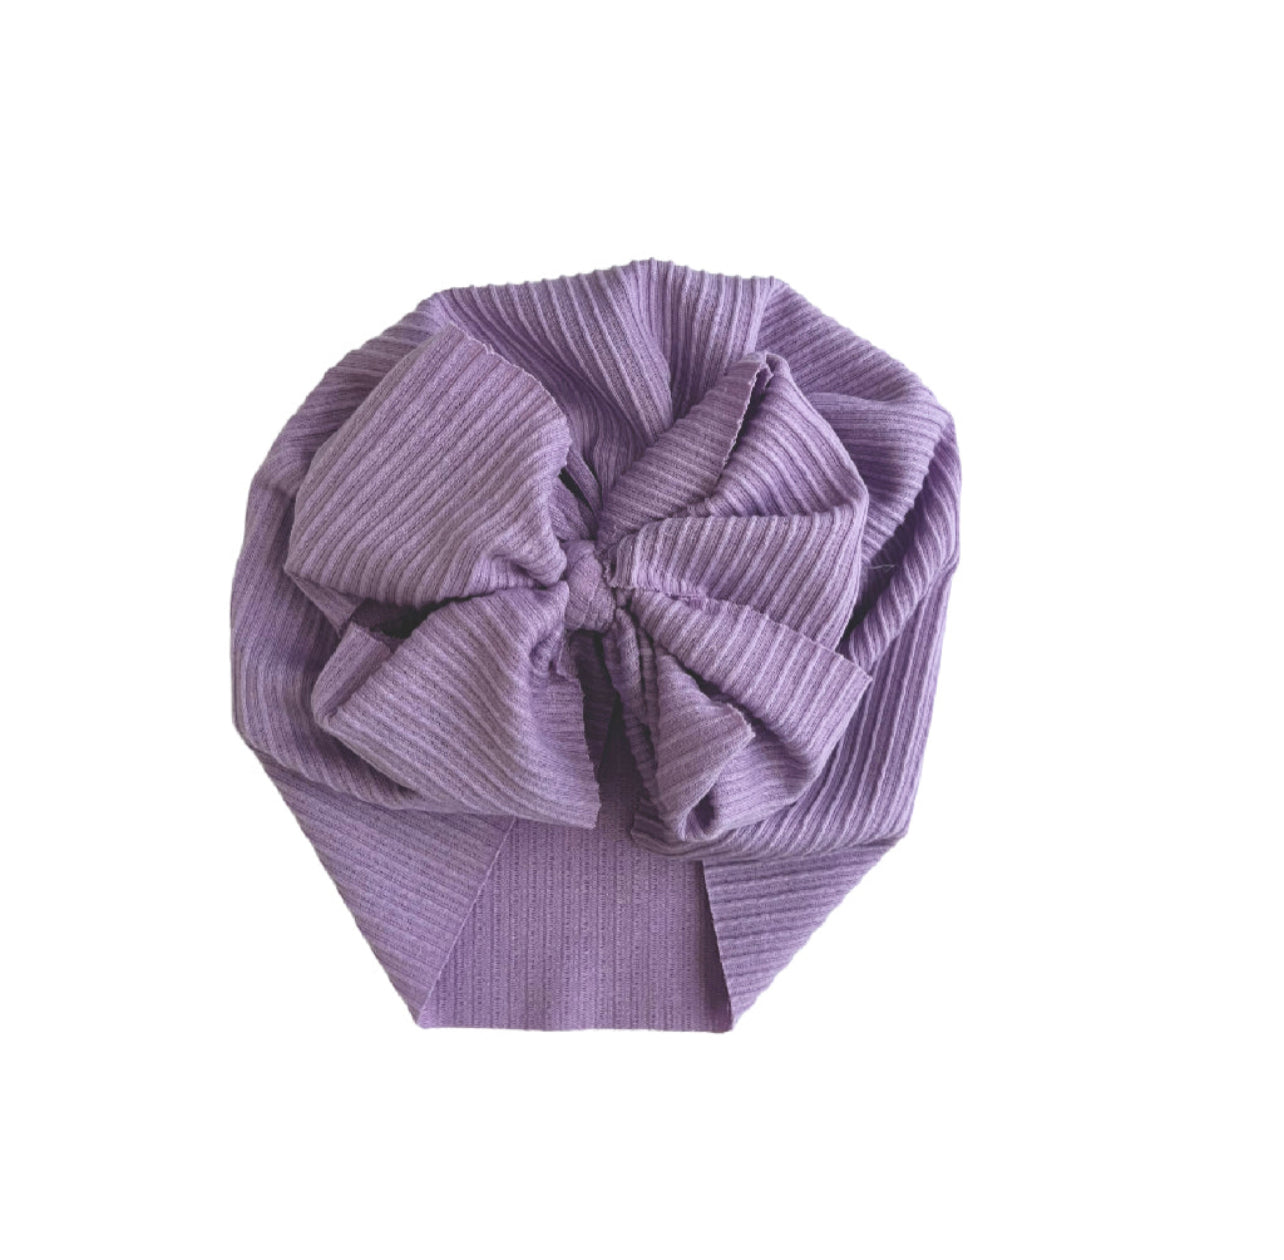 Sale! “Lavender Fields” Messy Bow Headwrap/Turban